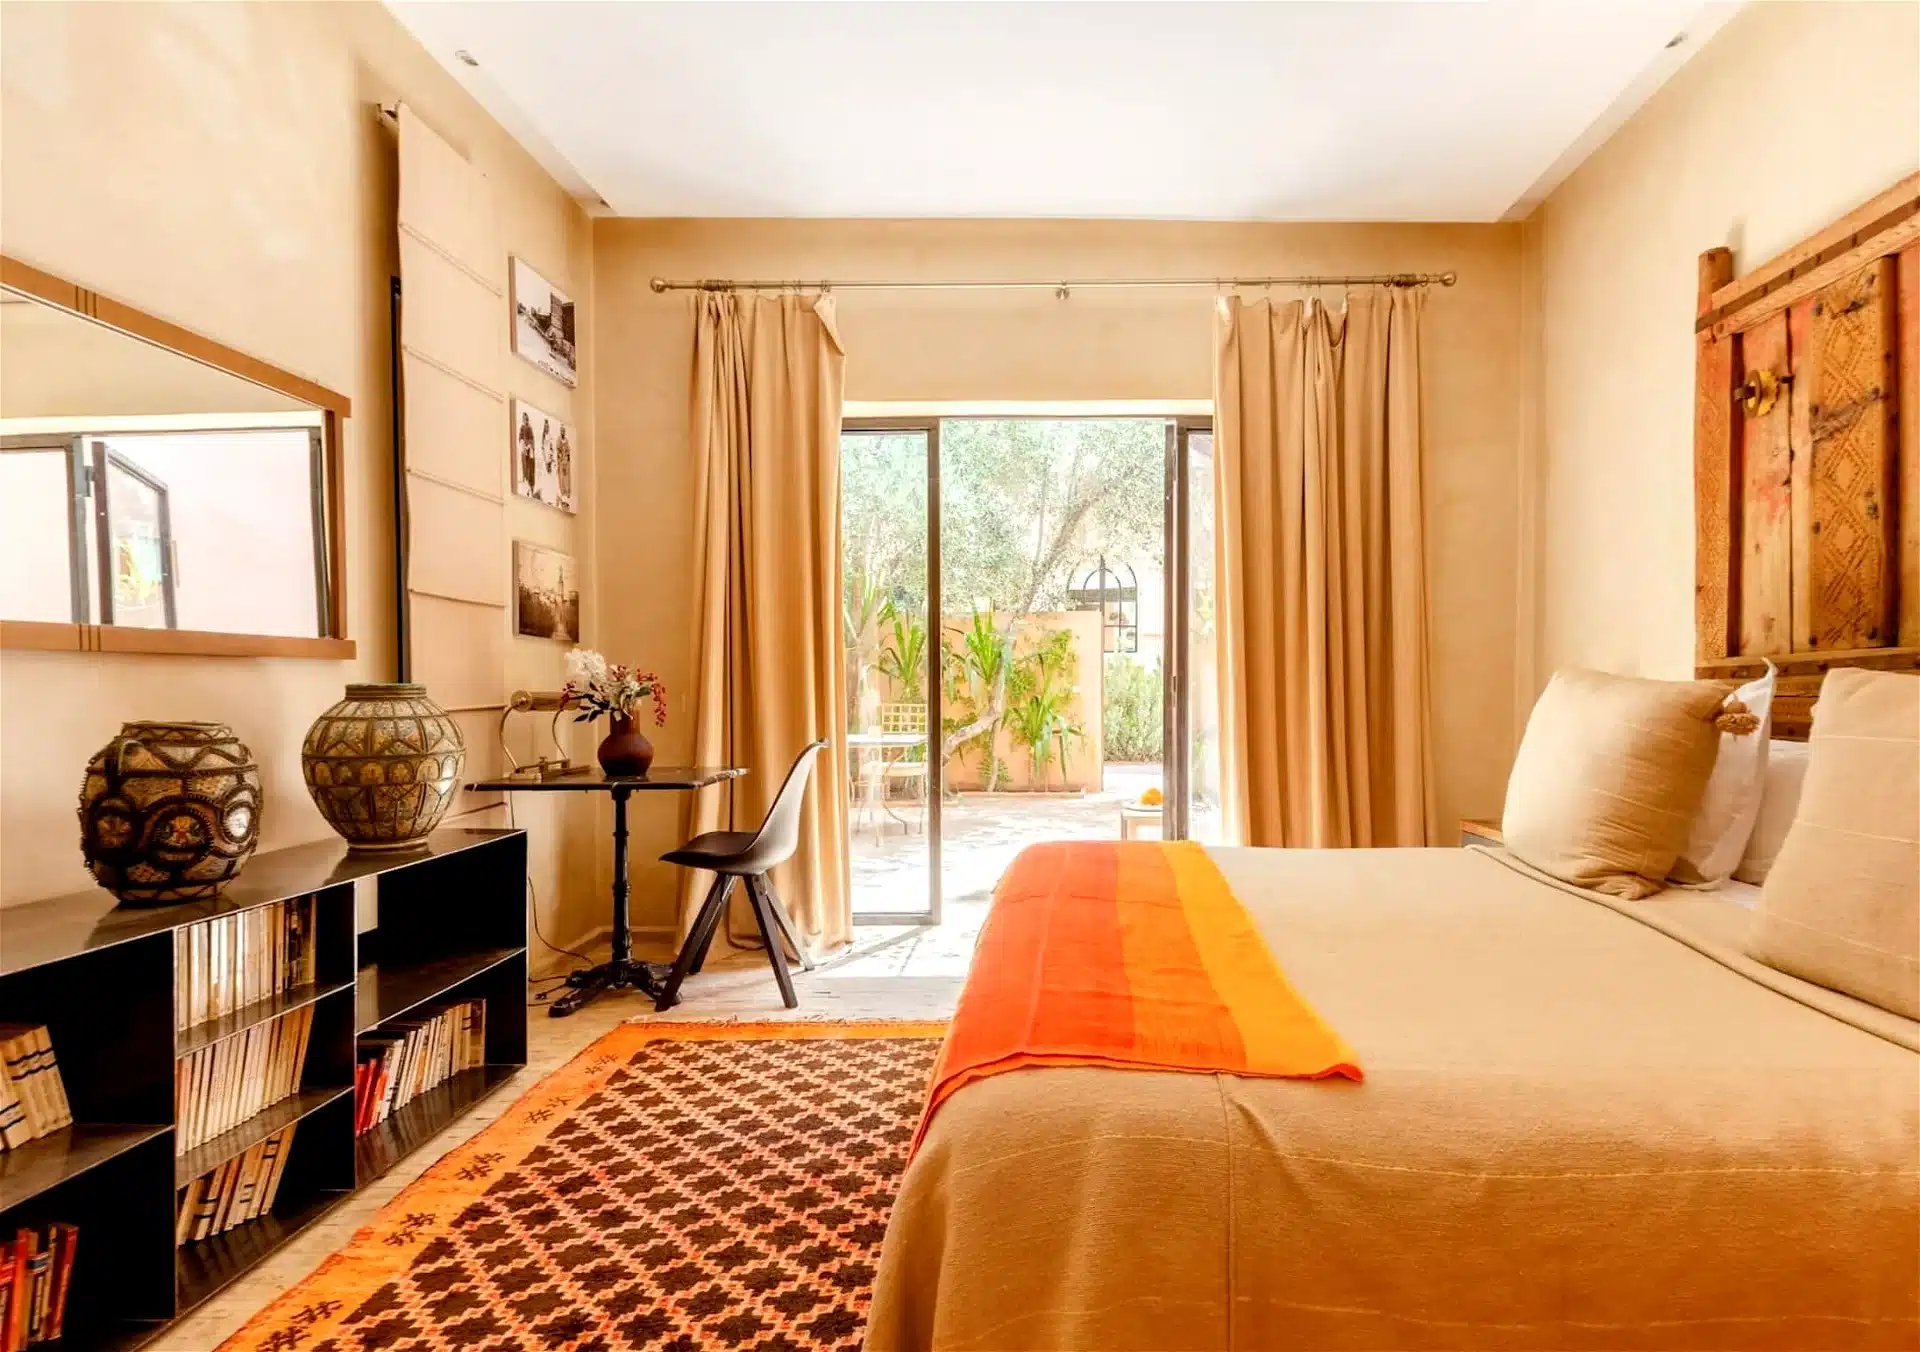 Luxury bedroom Marrakesh Villa, fundraiser auction items, live auction items